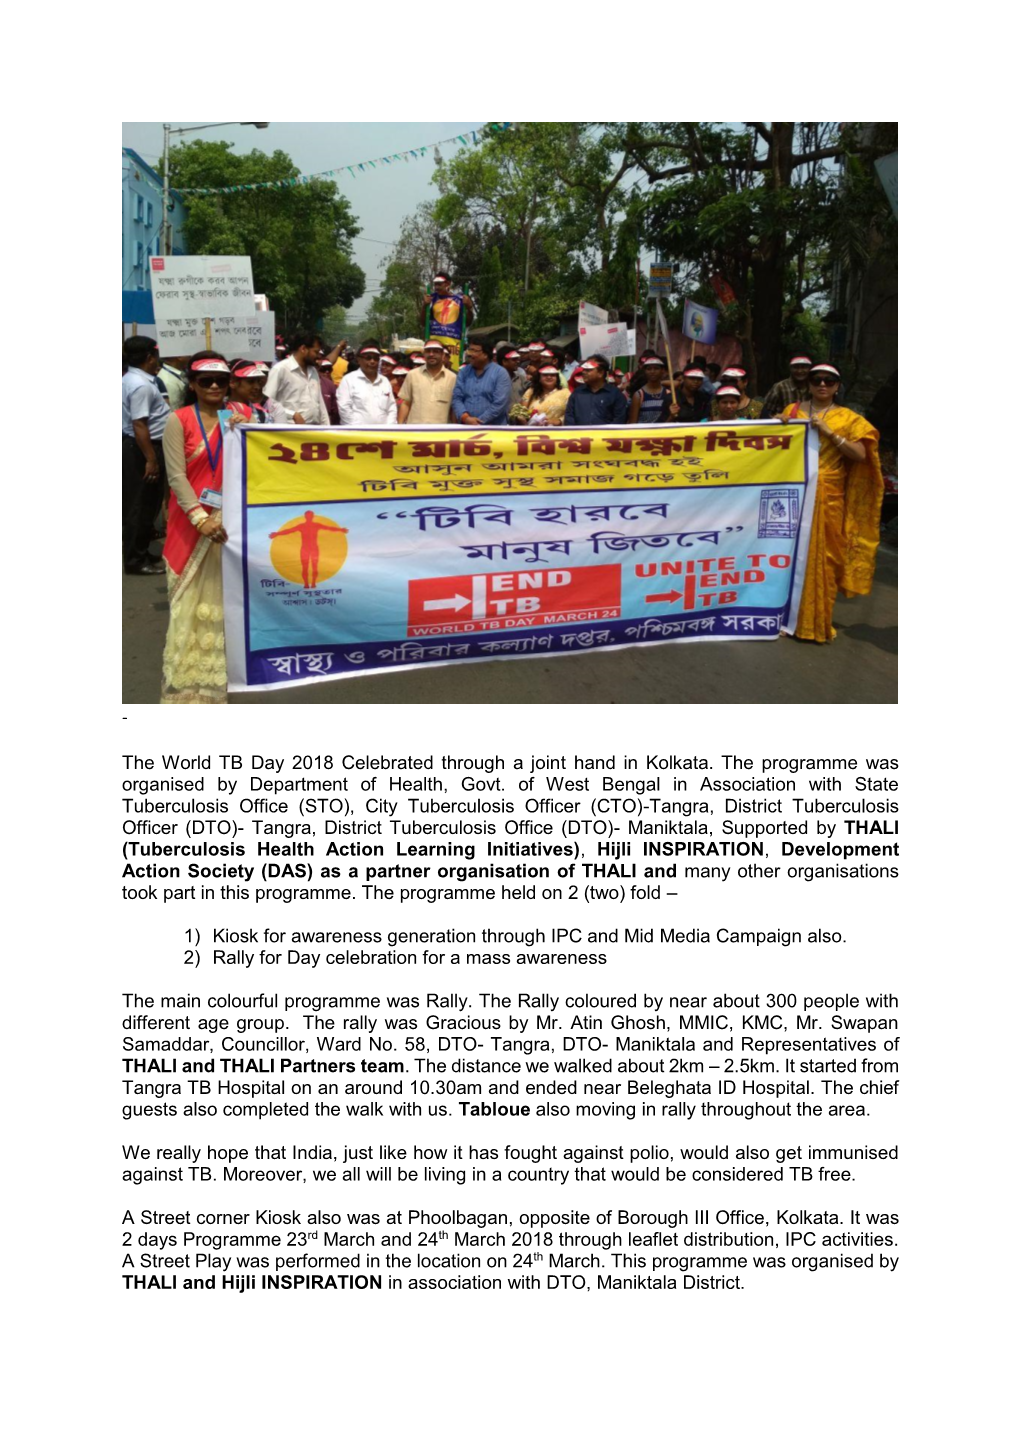 Kolkata Commemorates World TB